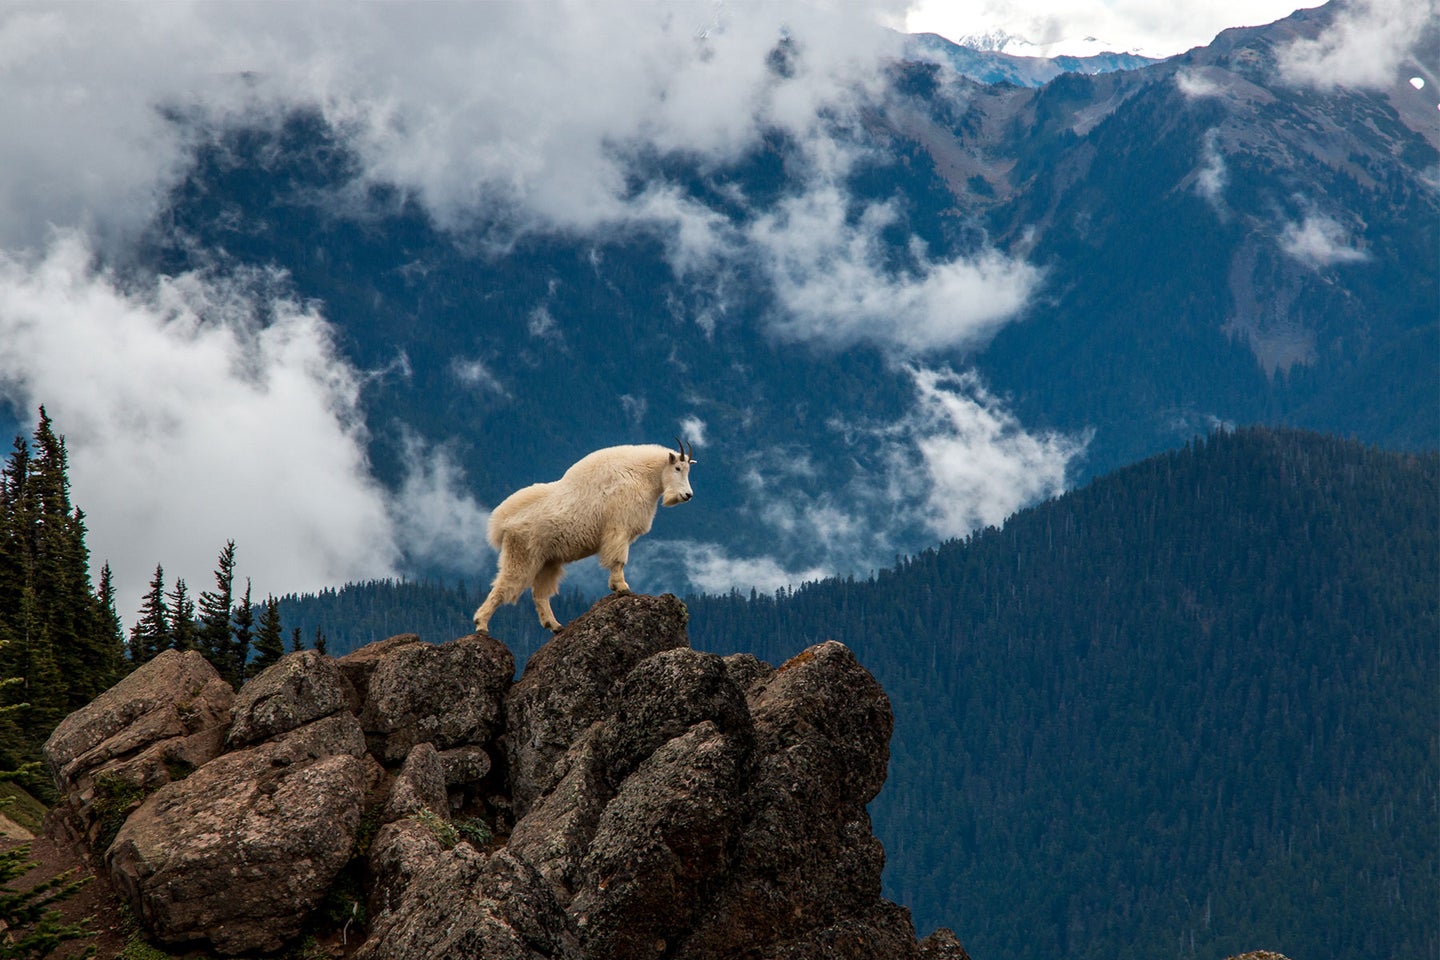 A mountain goat on a rocky outcropping.